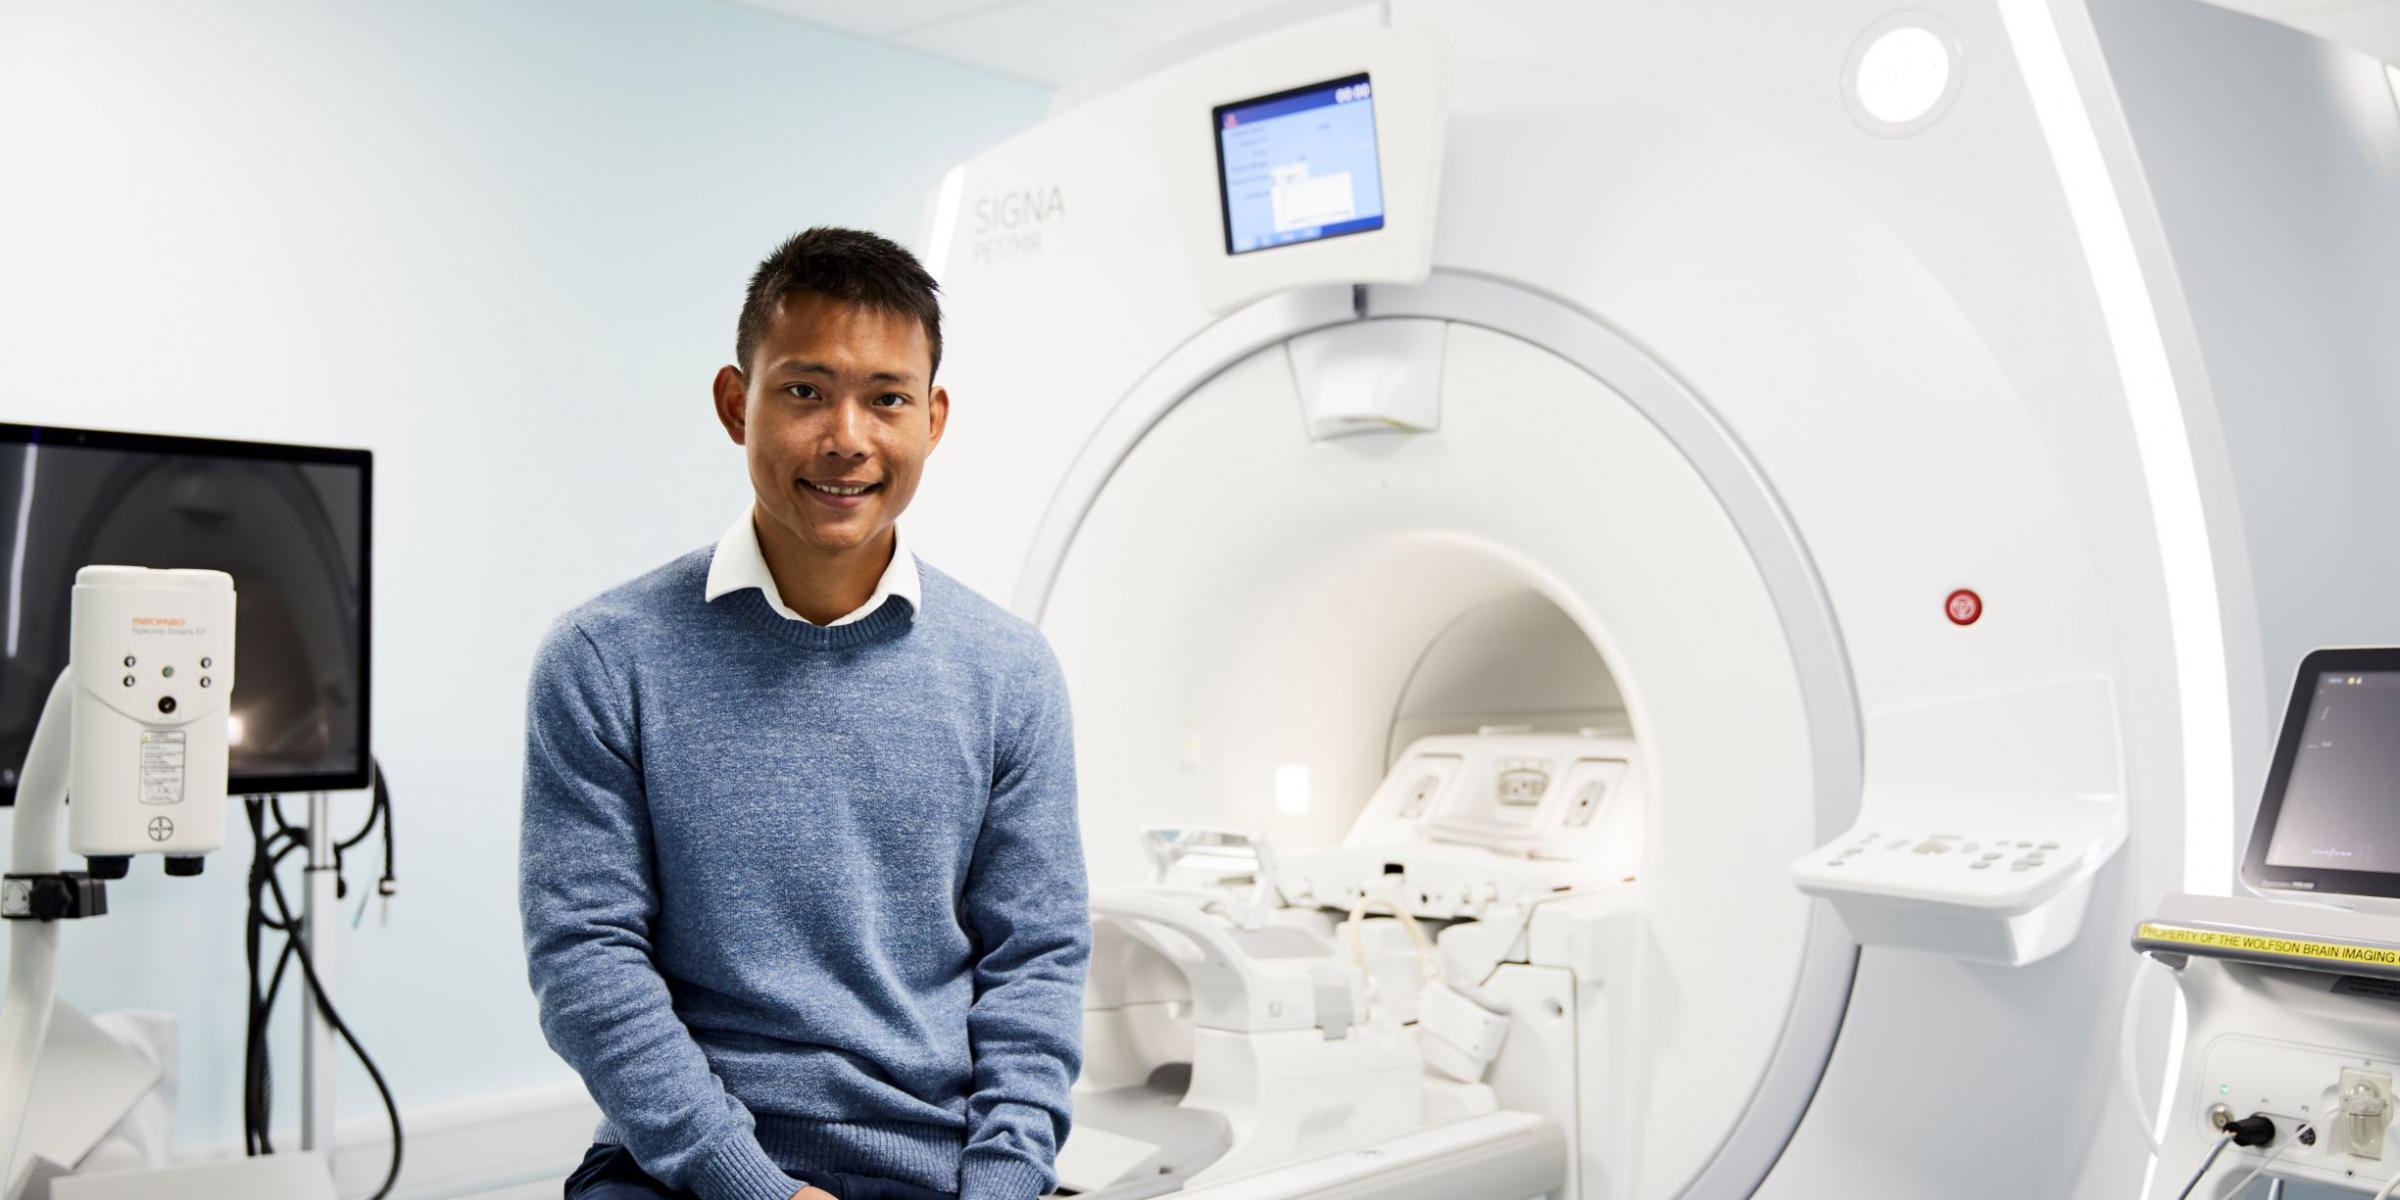 Dr Elijah Mak with an MRI scanner